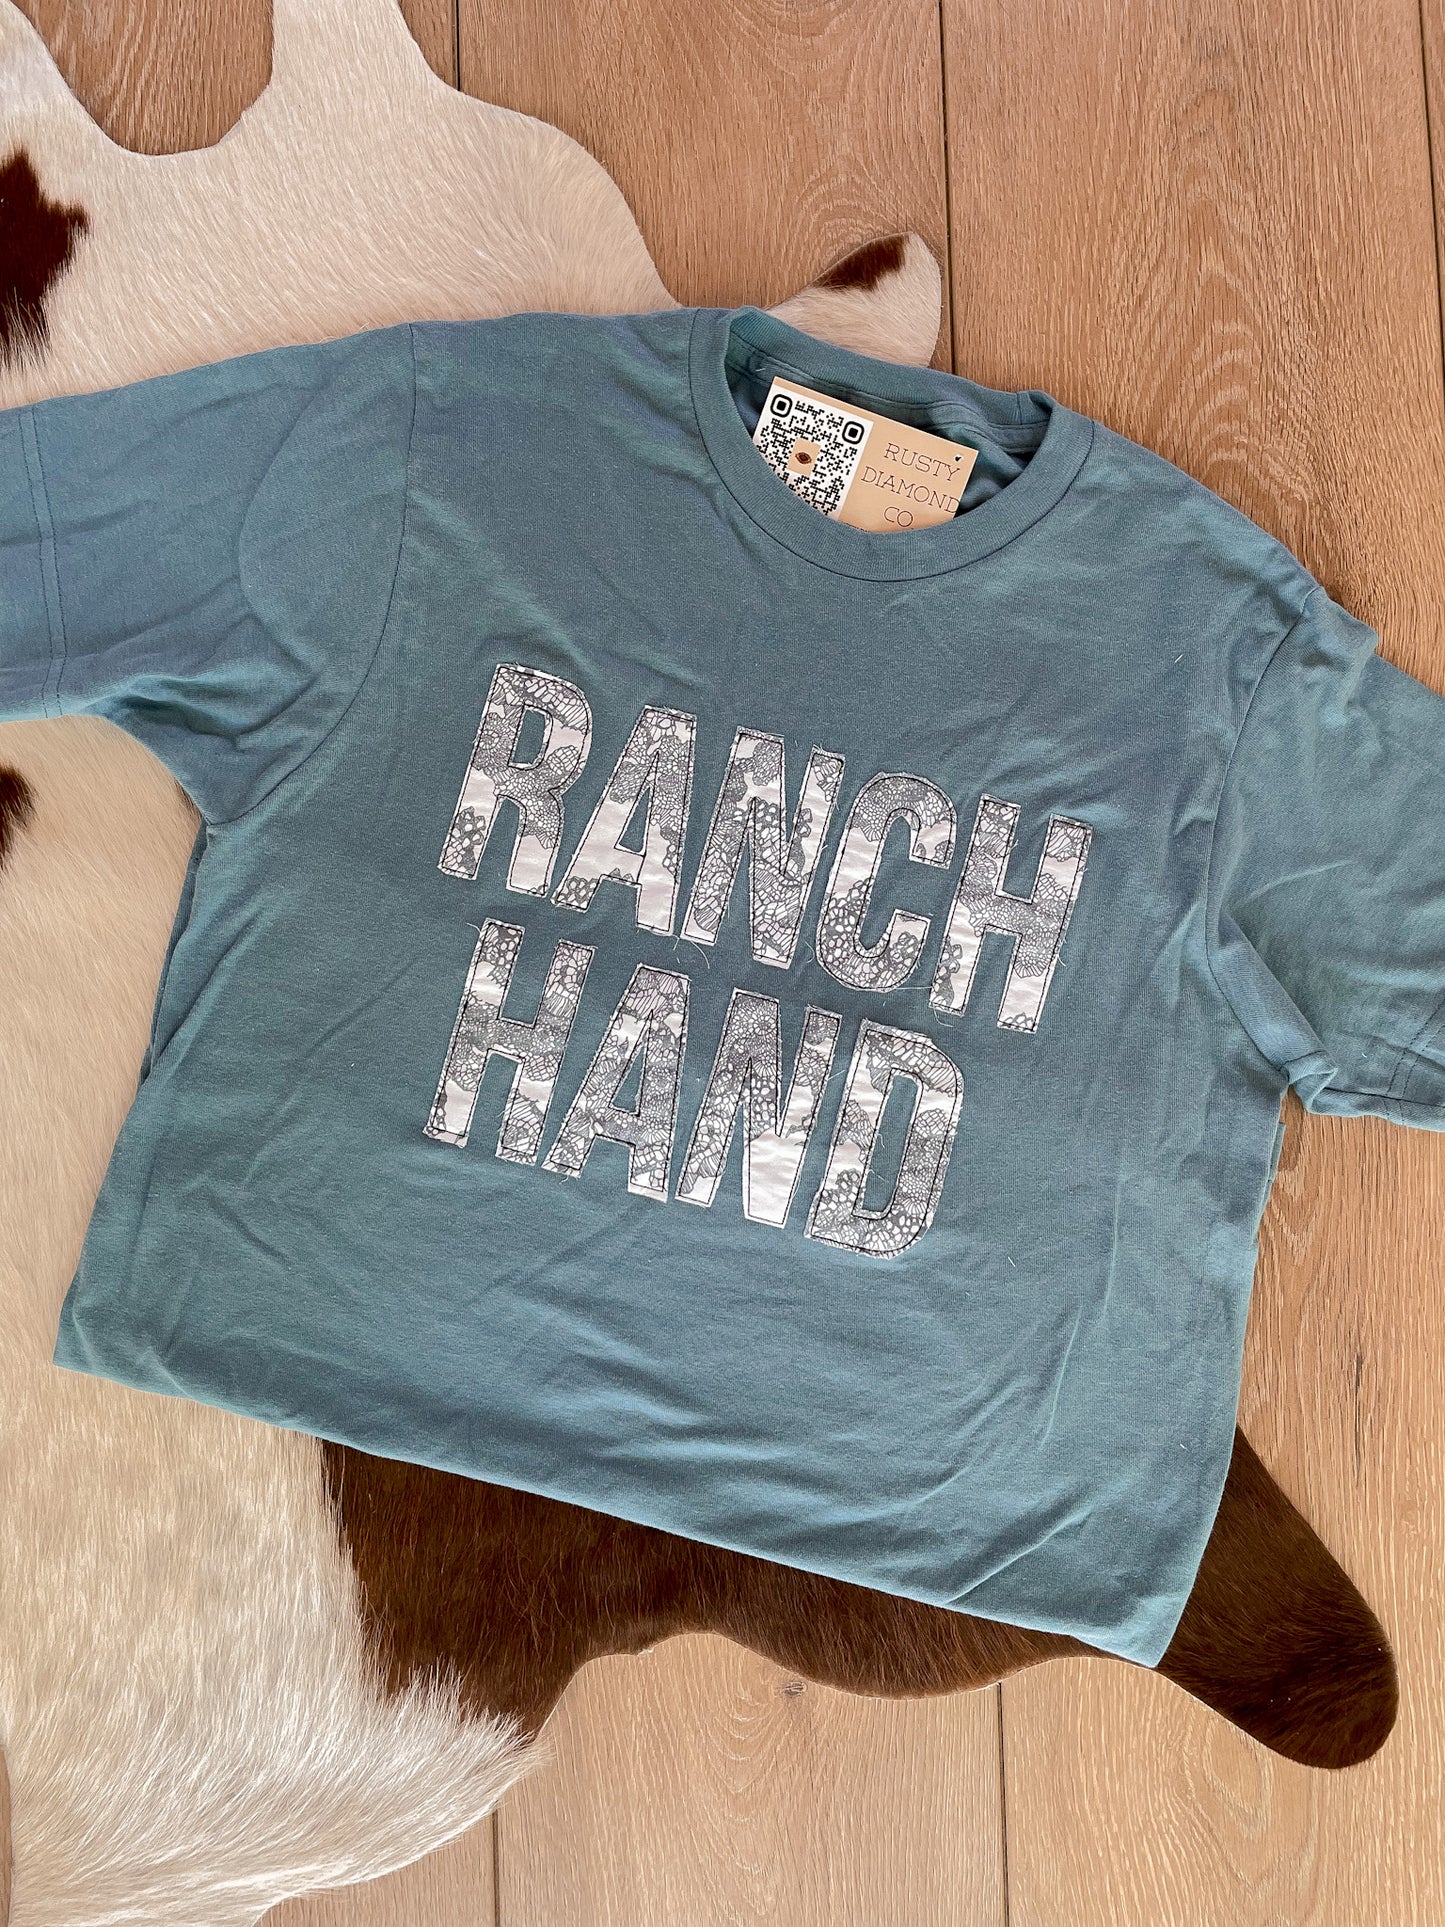 Ranch Hand - Full length tee